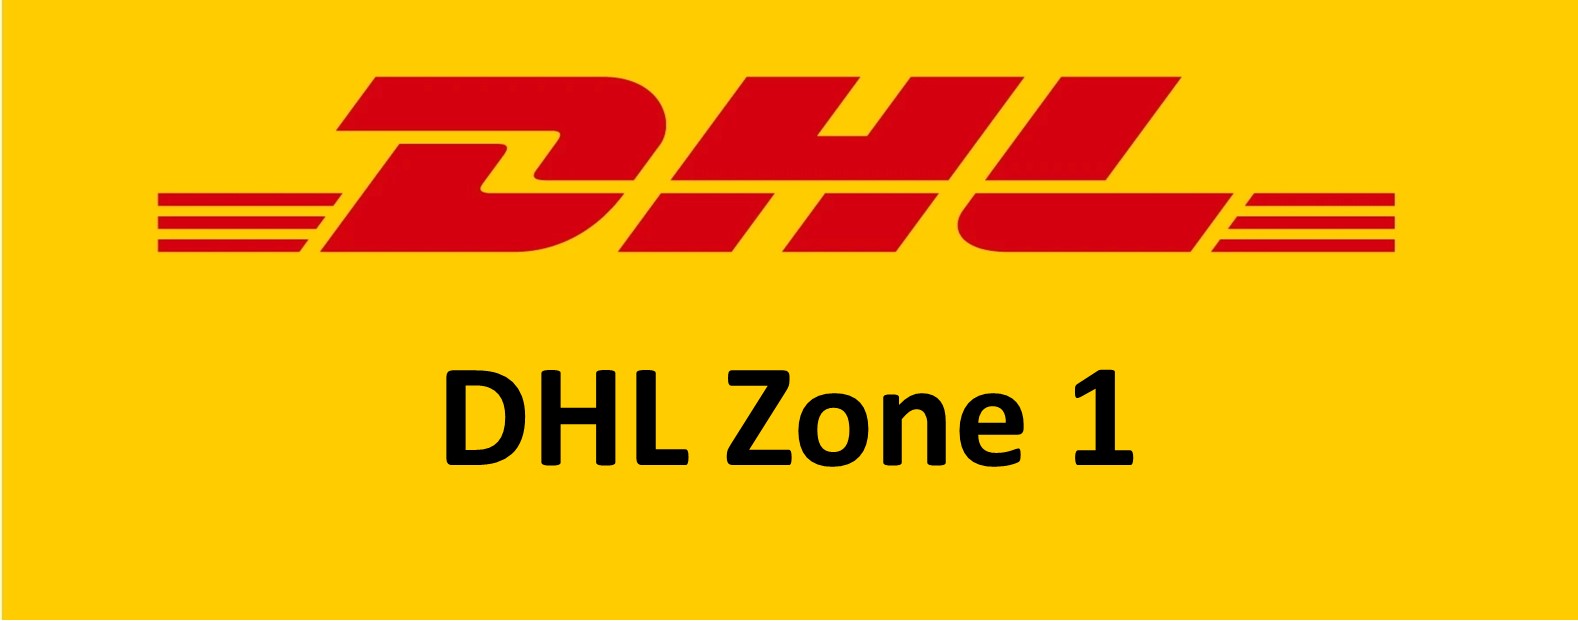 DHL Zone 1